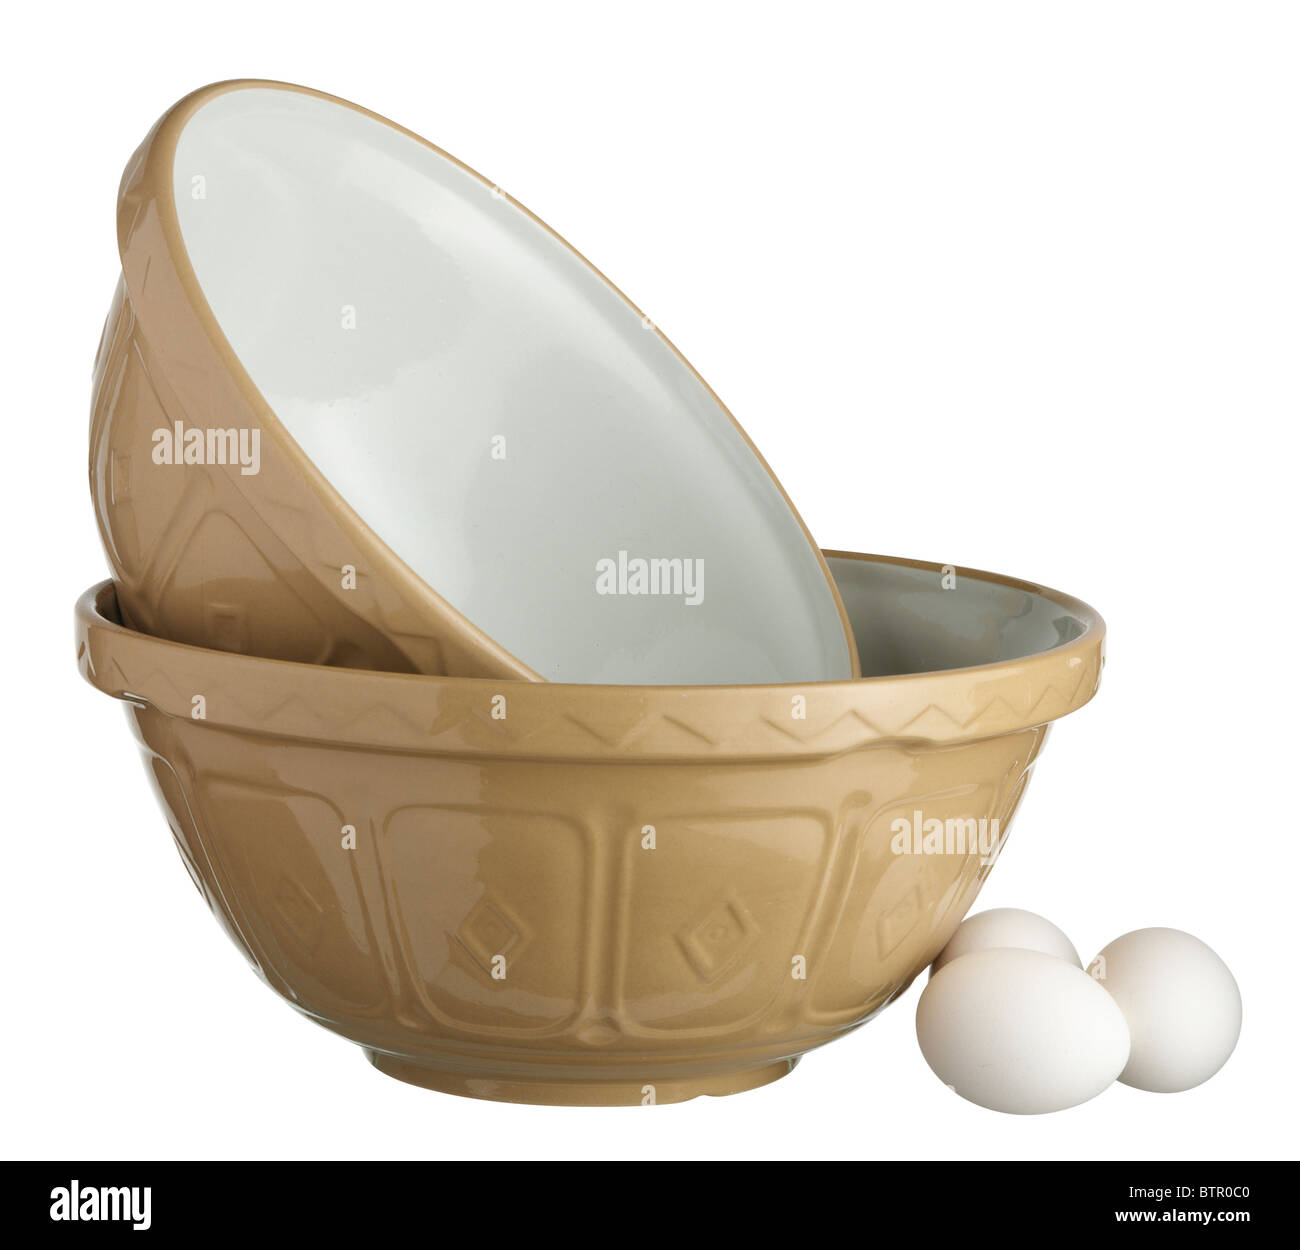 https://c8.alamy.com/comp/BTR0C0/mixing-bowls-BTR0C0.jpg